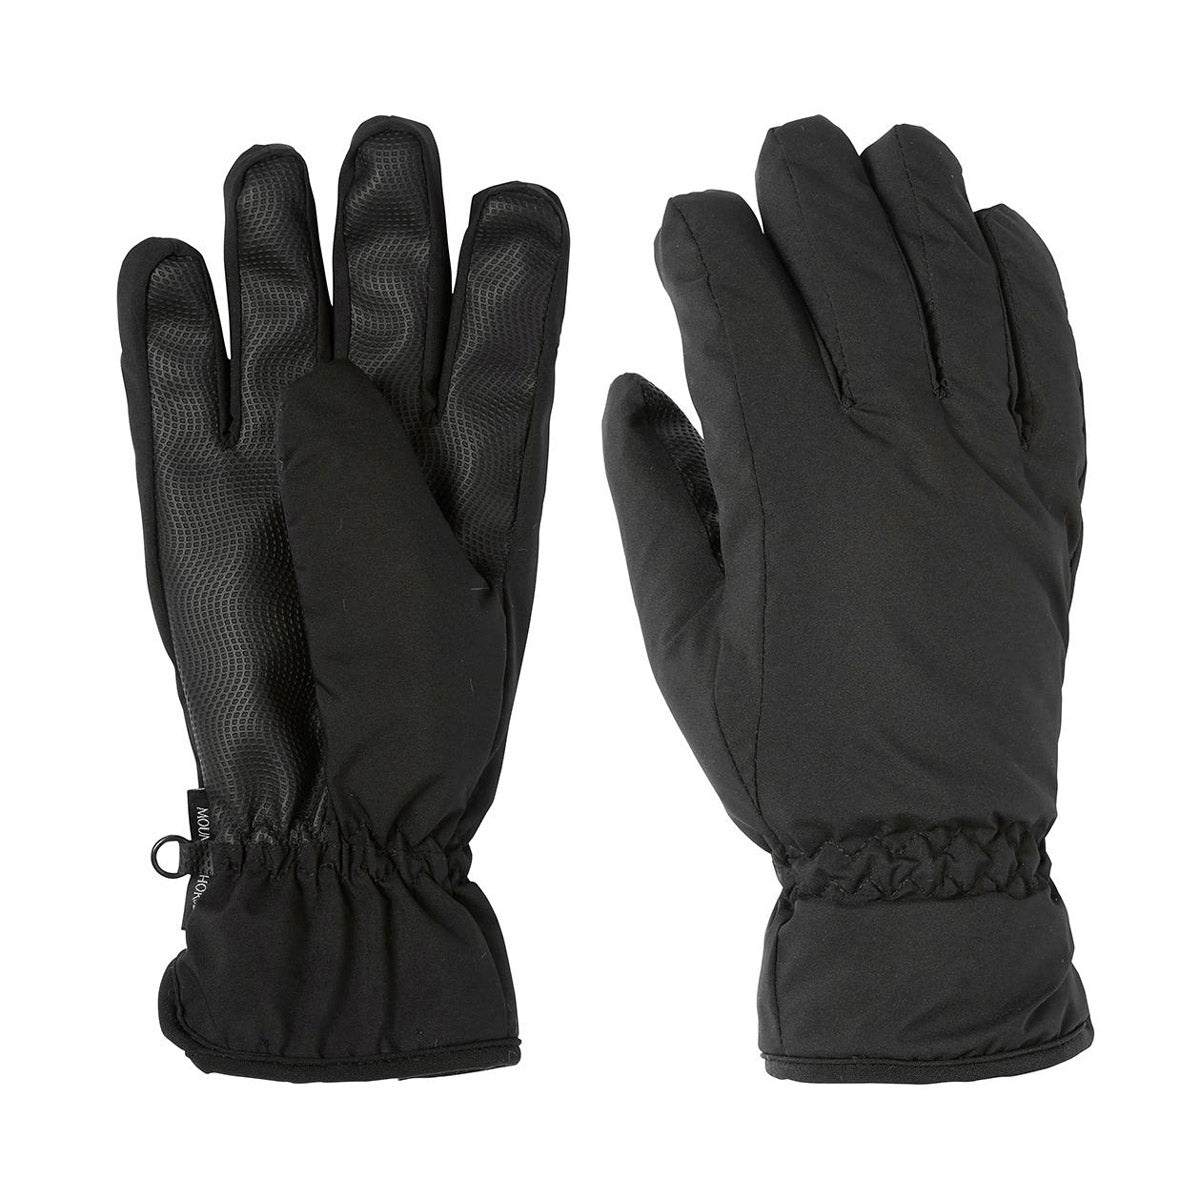 40% OFF - MOUNTAIN HORSE Heat Winter Waterproof Gloves - Black - Size: LARGE